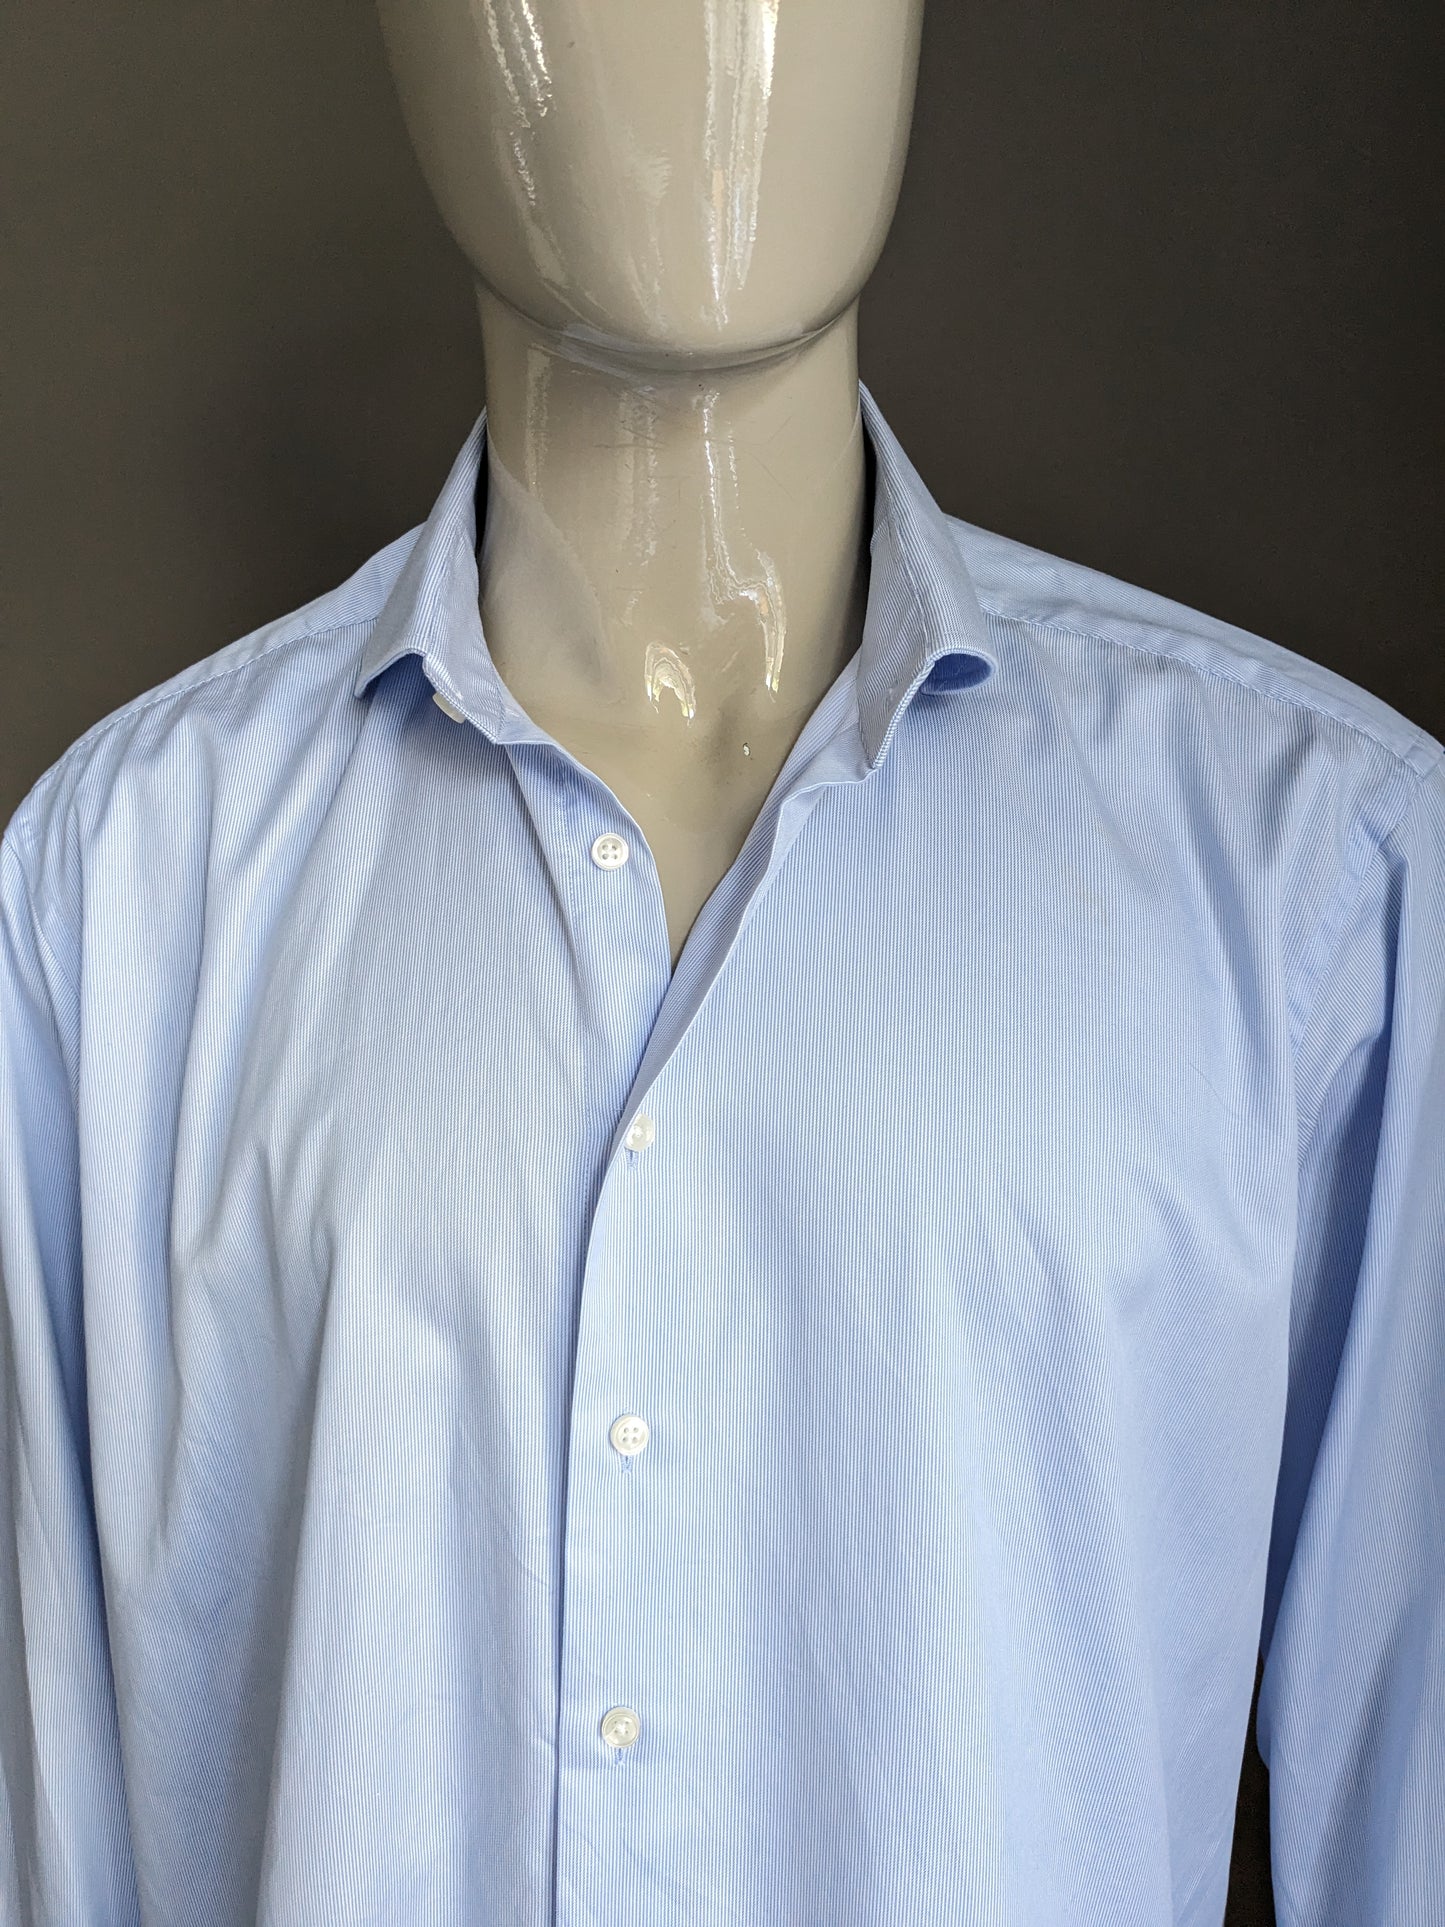 Christian Berg overhemd. Blauw Wit gestreept. Maat 2XL / 3XL. type Manchetknopen.